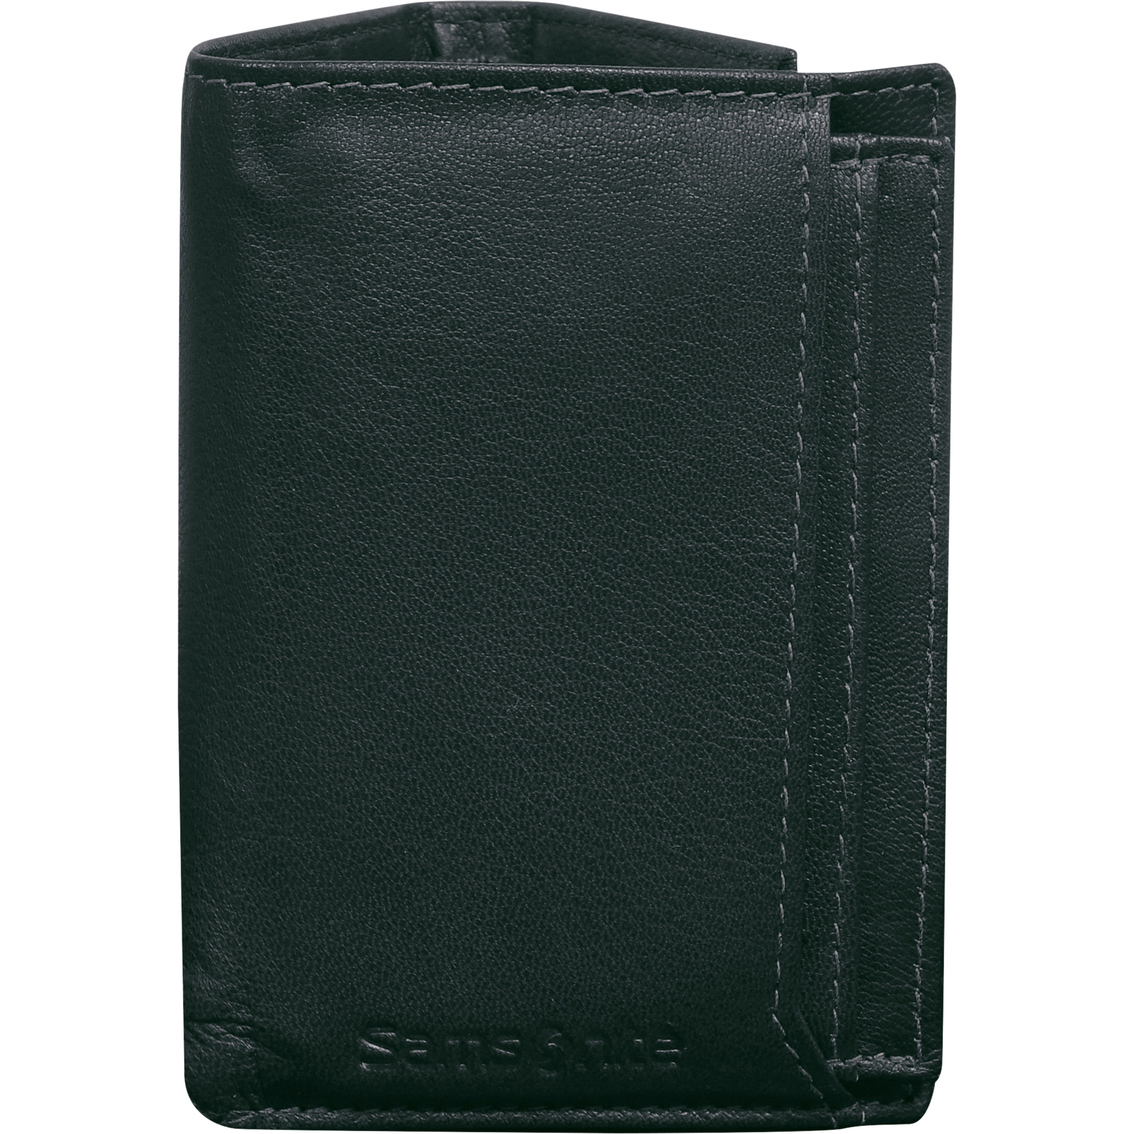 Samsonite Three Fold I.d. Wallet | Wallets | Clothing & Accessories ...